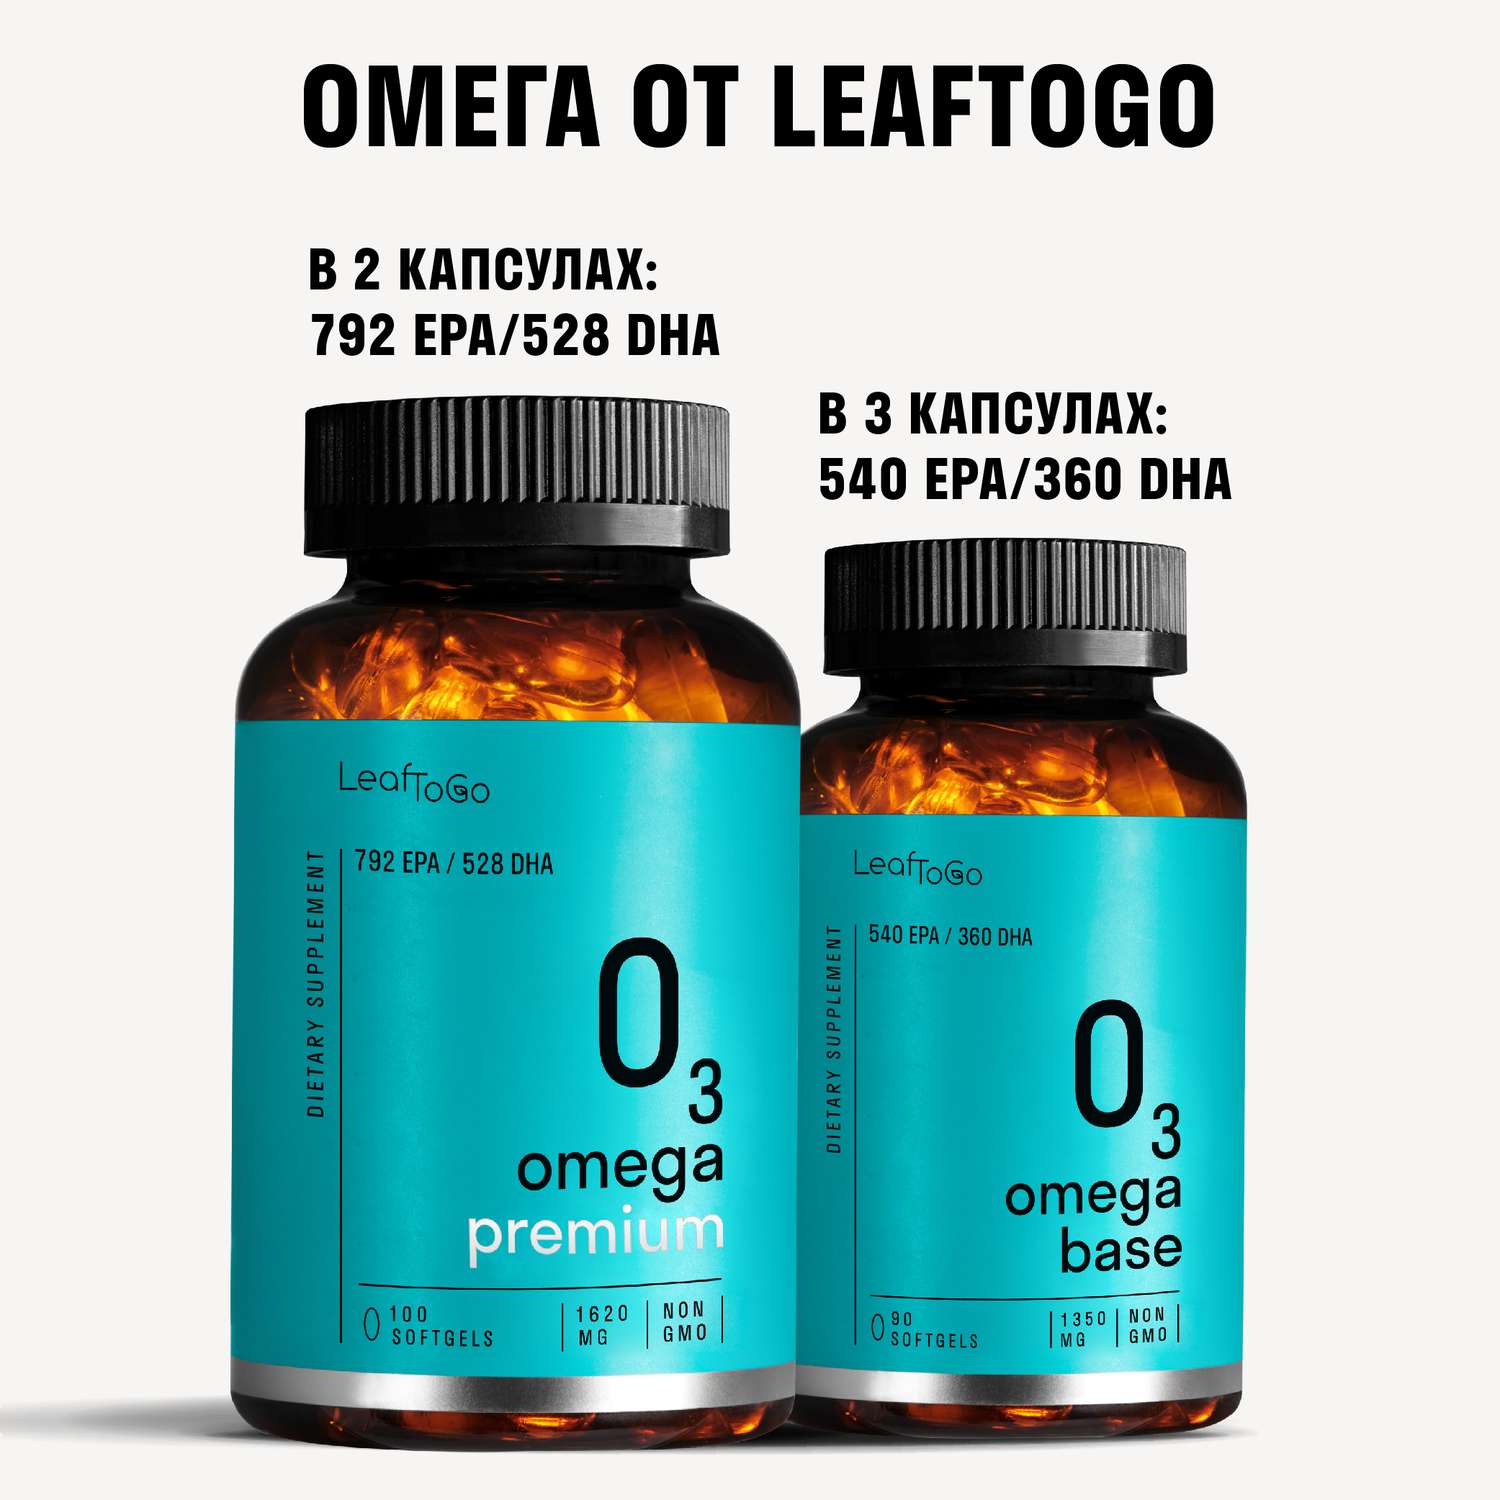 Омега 3 LeafToGo Витамины 90 капсул рыбий жир 1350 мг - фото 7